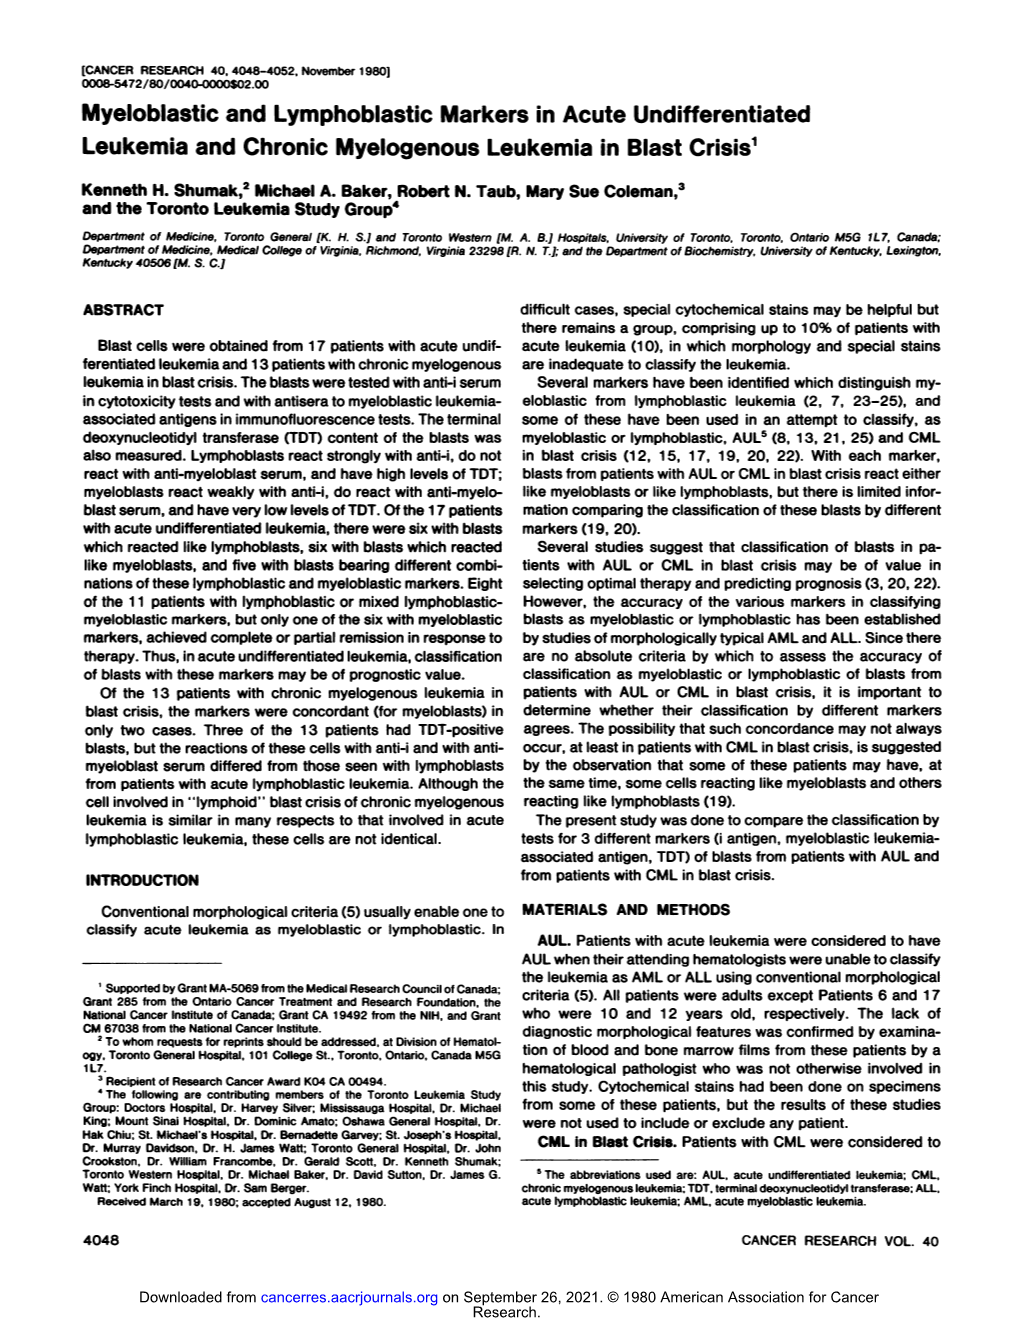 Myeloblastic and Lymphoblastic Markers in Acute Undifferentiated Leukemia and Chronic Myelogenous Leukemia in Blast Crisis1